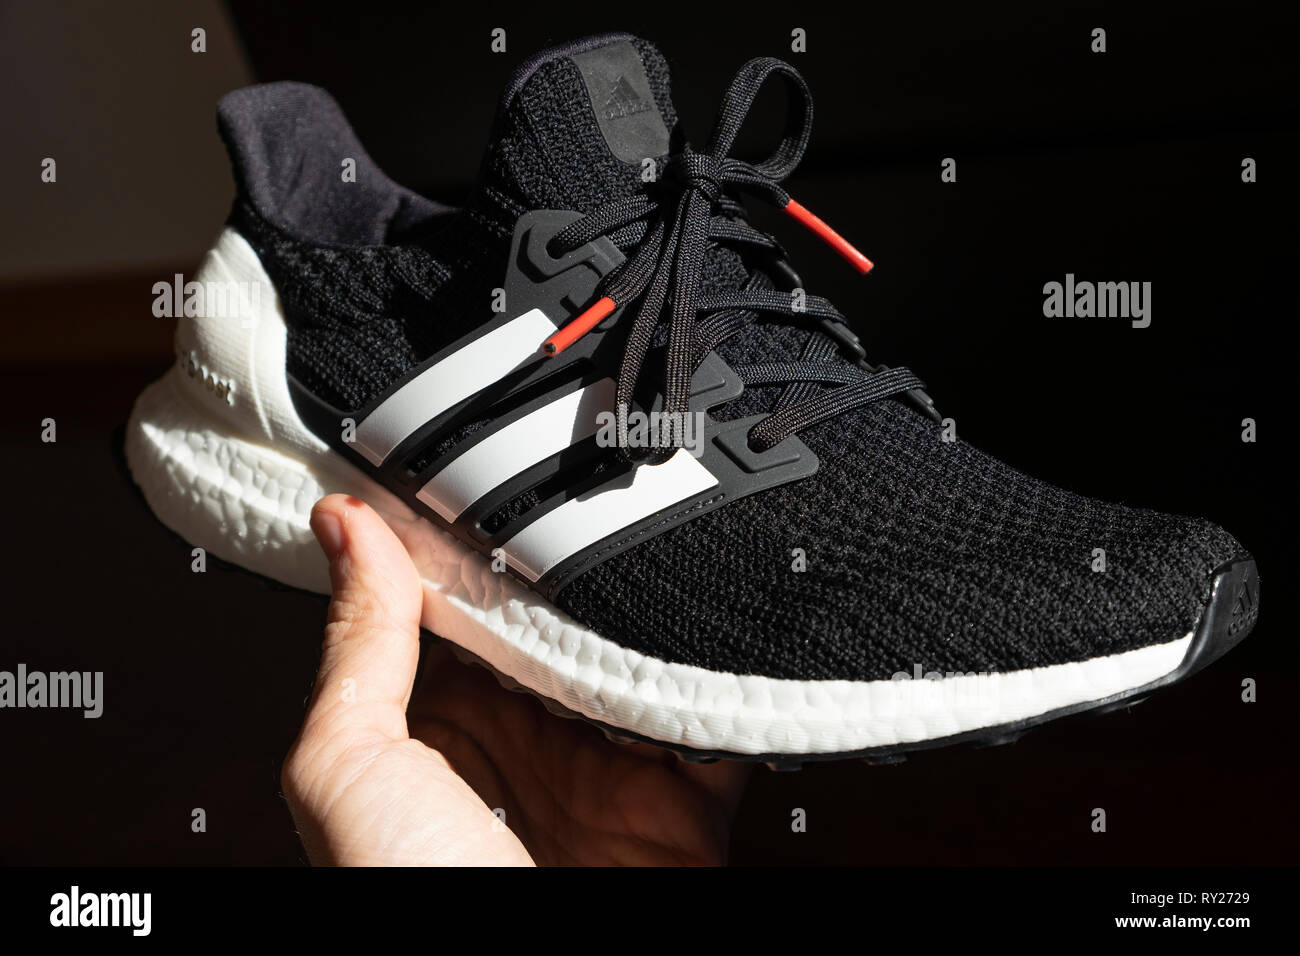 Adidas Ultra Boost Fotos e Imágenes de stock - Alamy